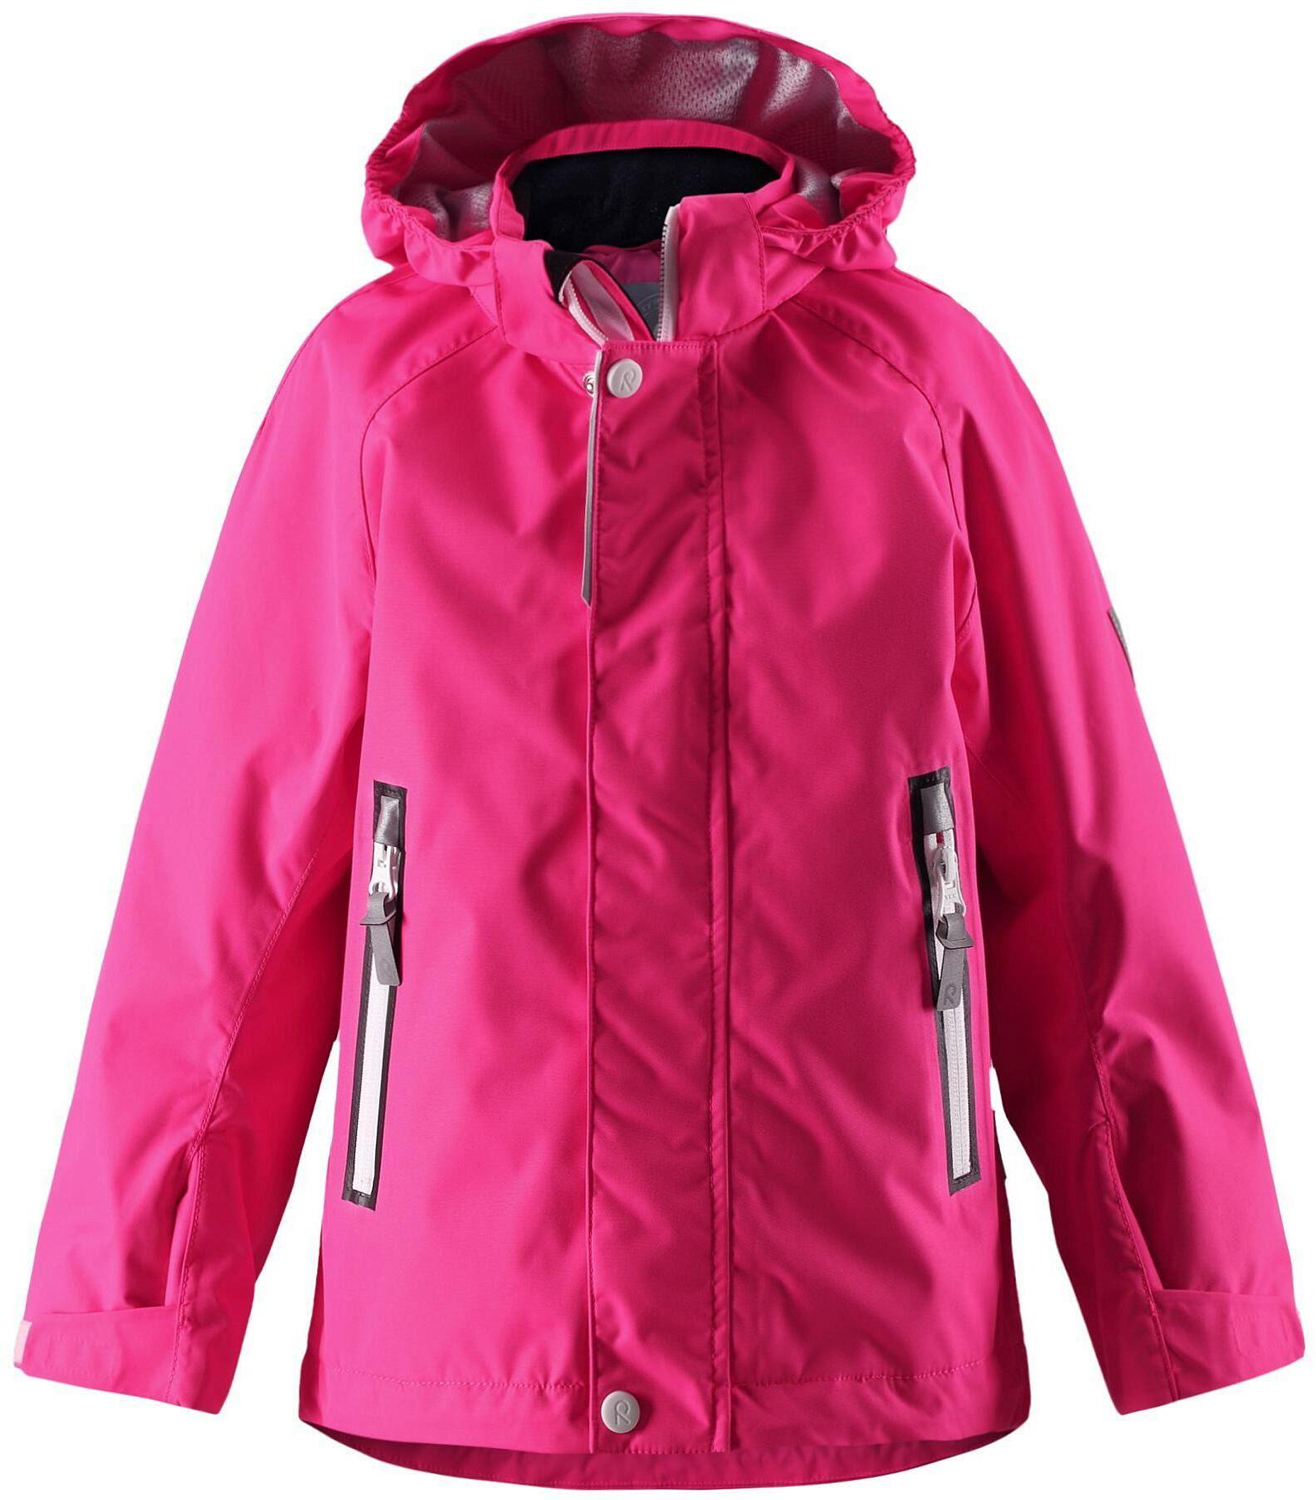 Куртка для активного отдыха Reima 2016 Pickle supreme pink